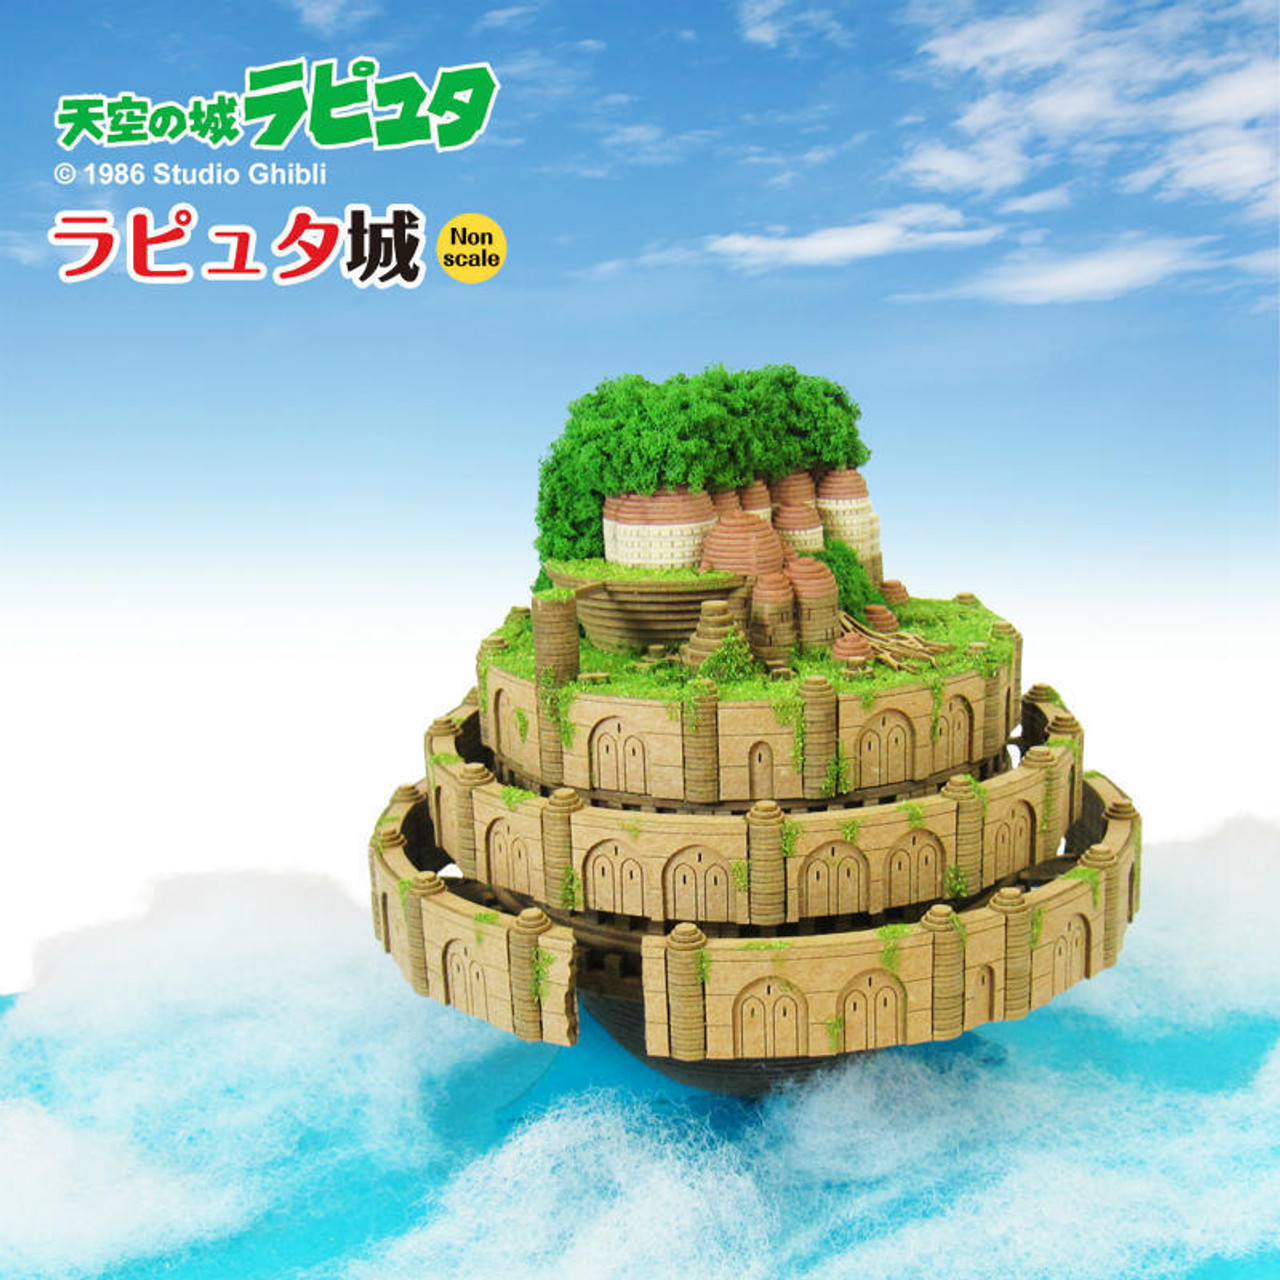 Sankei MK07-33 Studio Ghibli Laputa Castle (Laputa in the Sky) - Non-Scale  Paper Kits